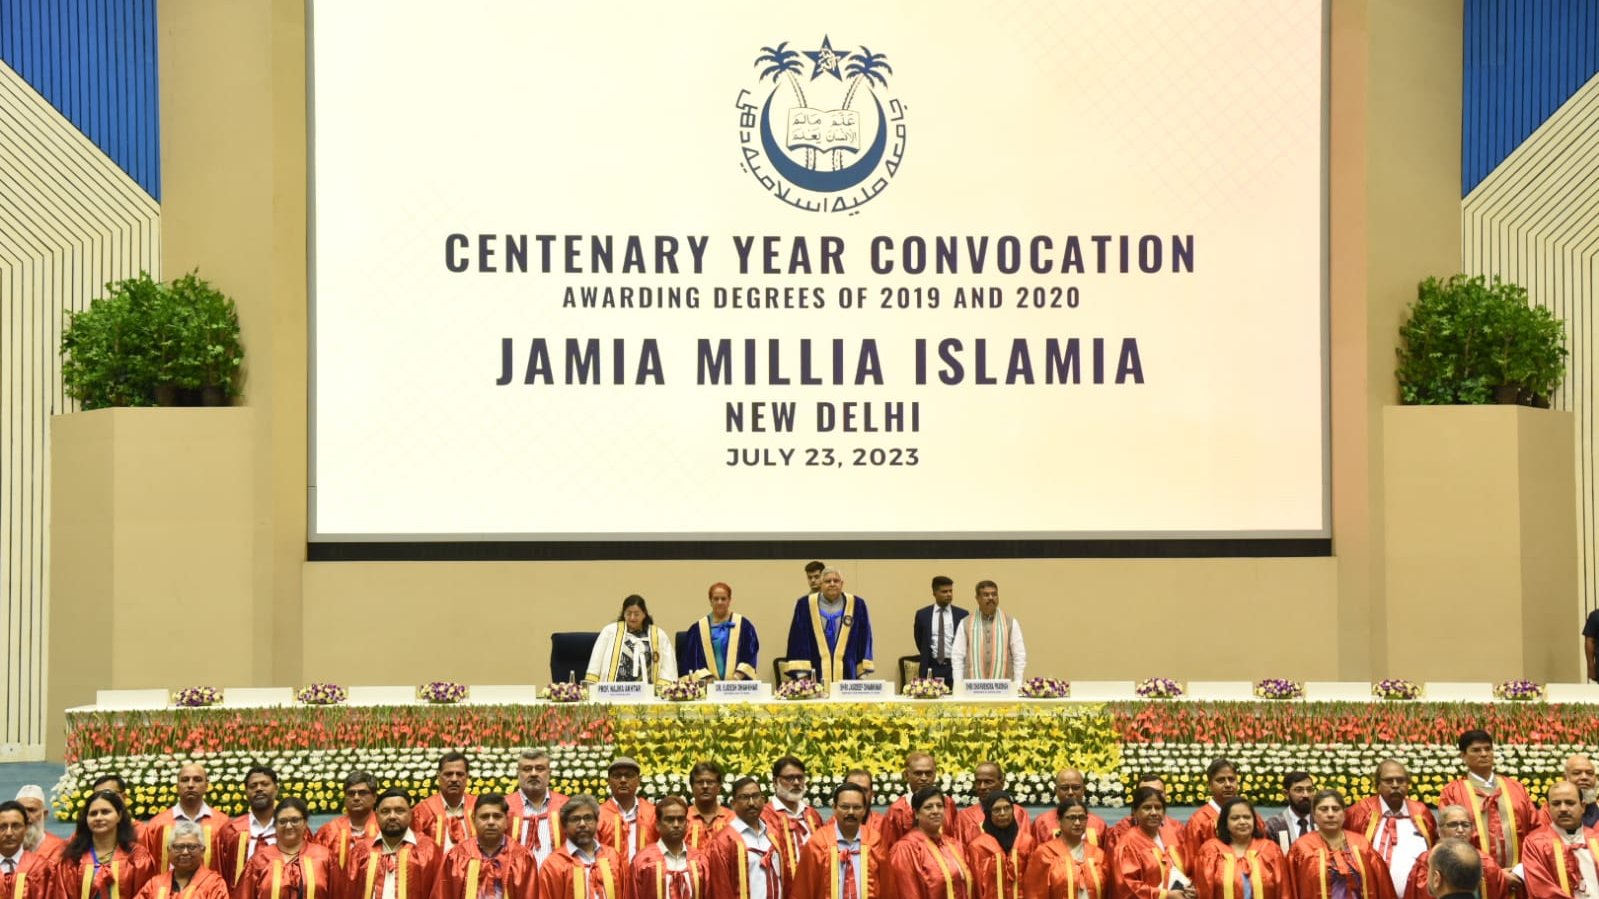 The Vice President, Shri Jagdeep Dhankhar attending the Centenary Year Convocation of Jamia Millia Islamia at Vigyan Bhawan in New Delhi on July 23, 2023.